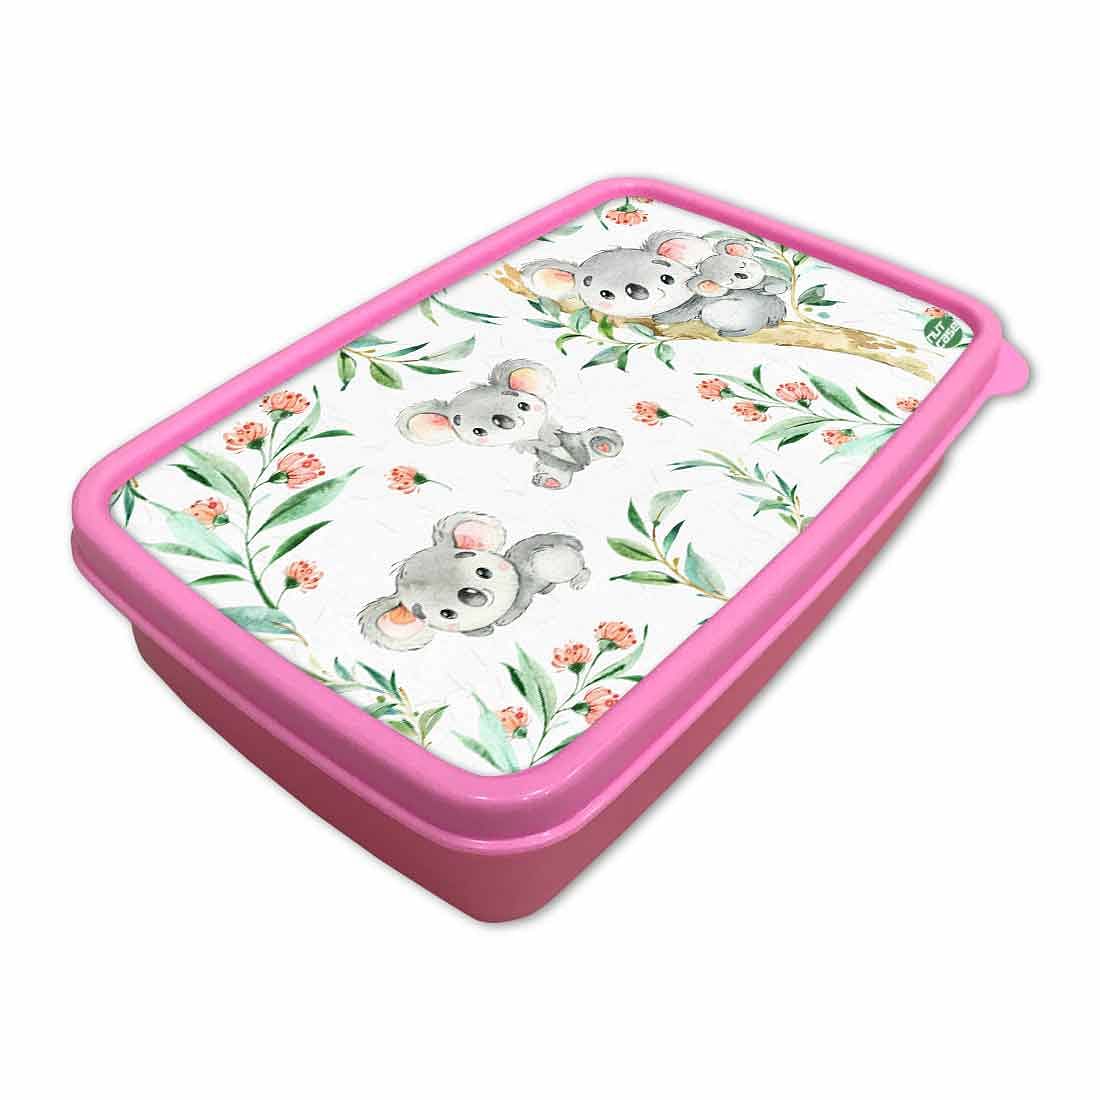 Childrens Plastic Snack Box for Girls Return Gifts Birthday Party - Cute Koala Nutcase